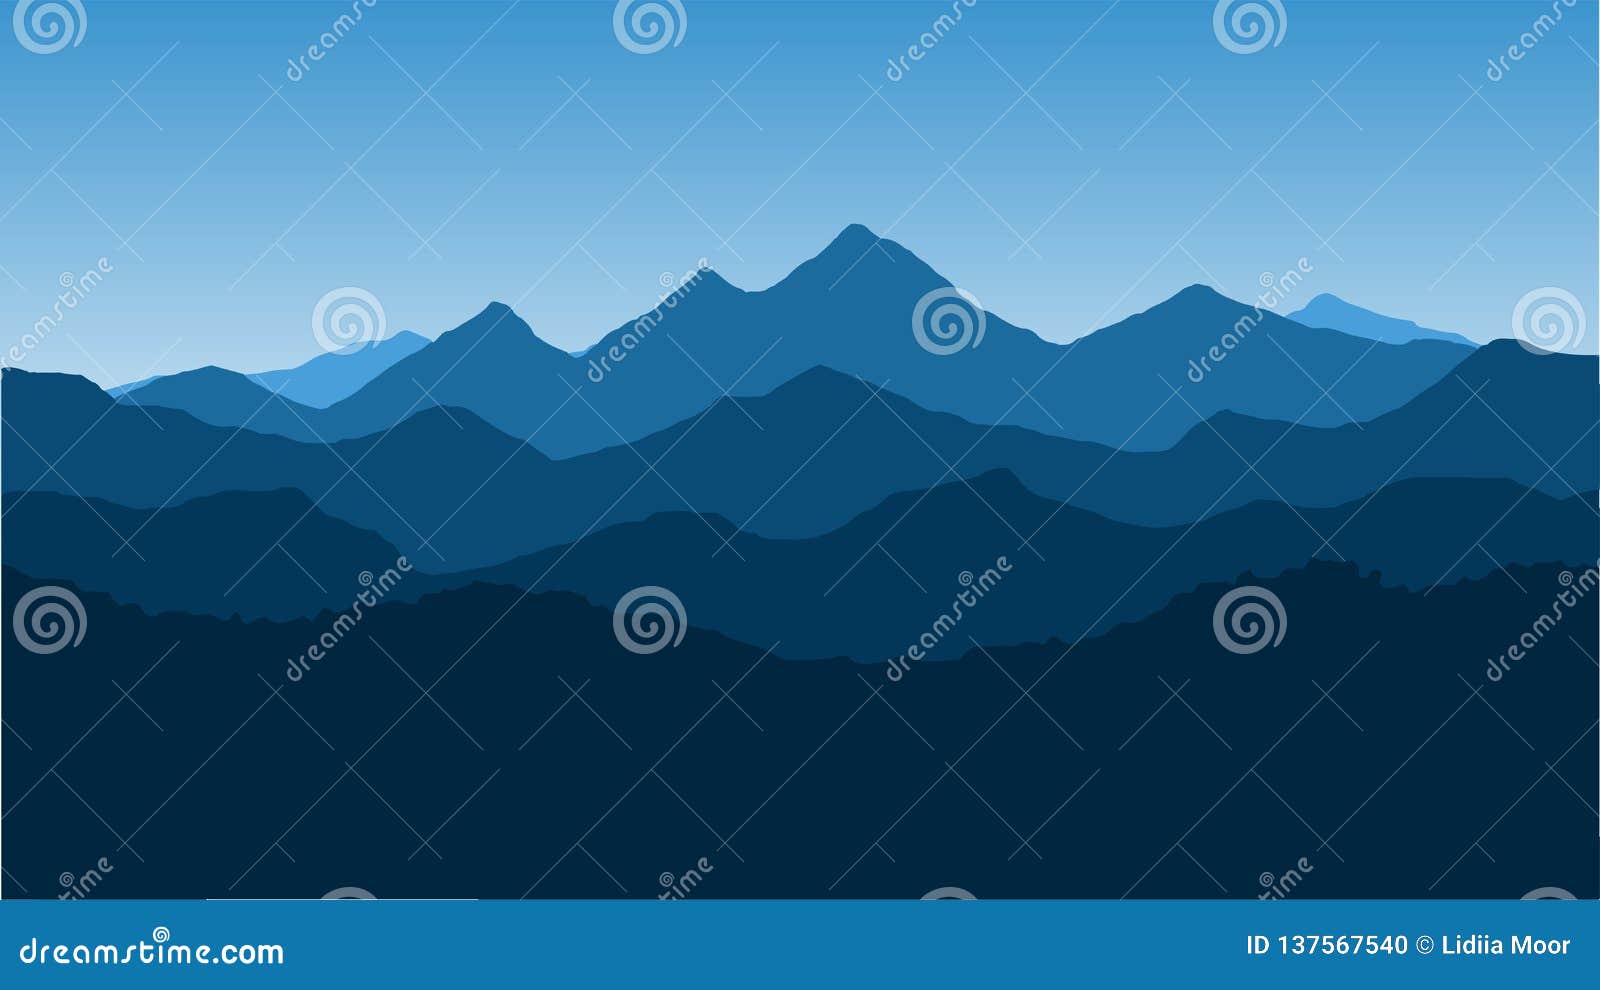 landscape, a mountain range